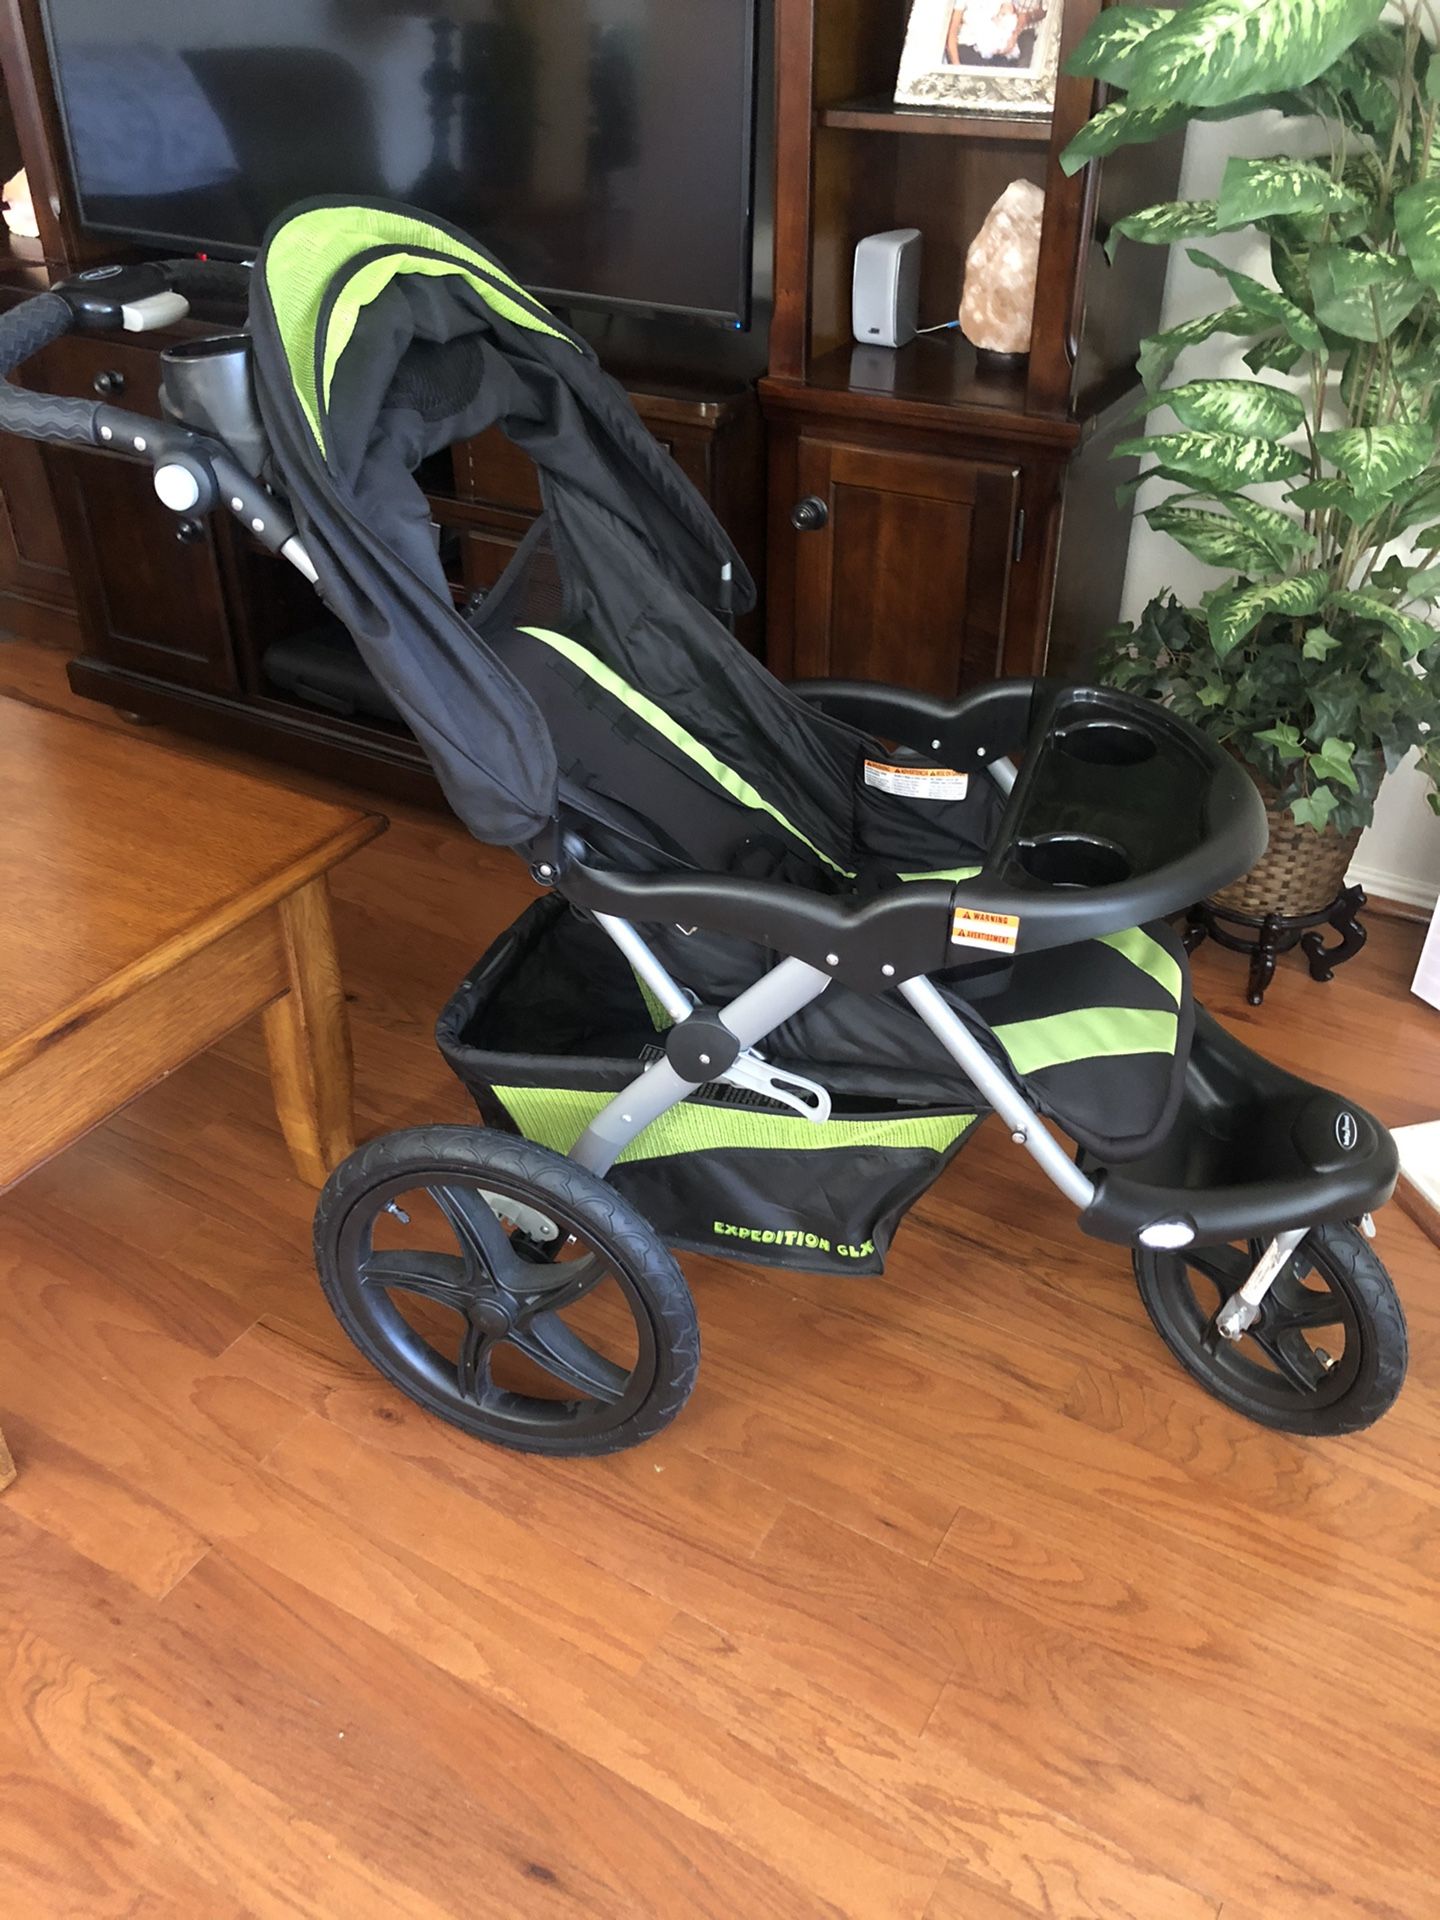 Brand new Baby jogging stroller